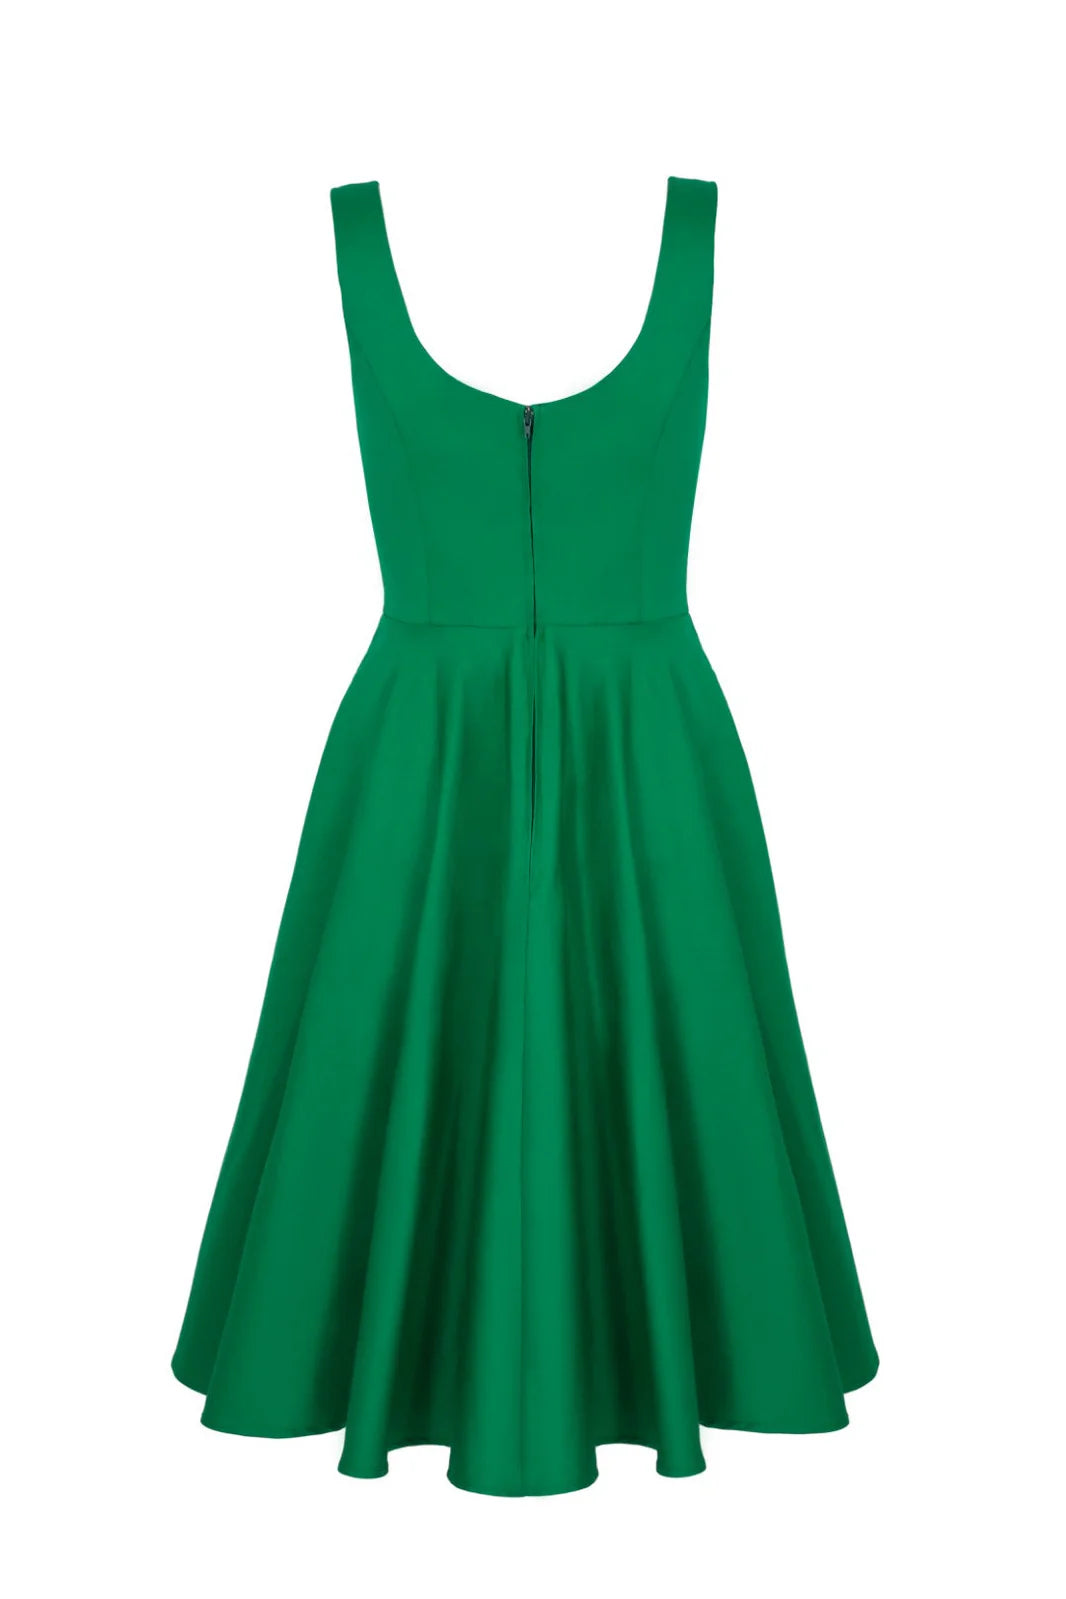 Heidi Emerald Green 50s Dress by Hell Bunny